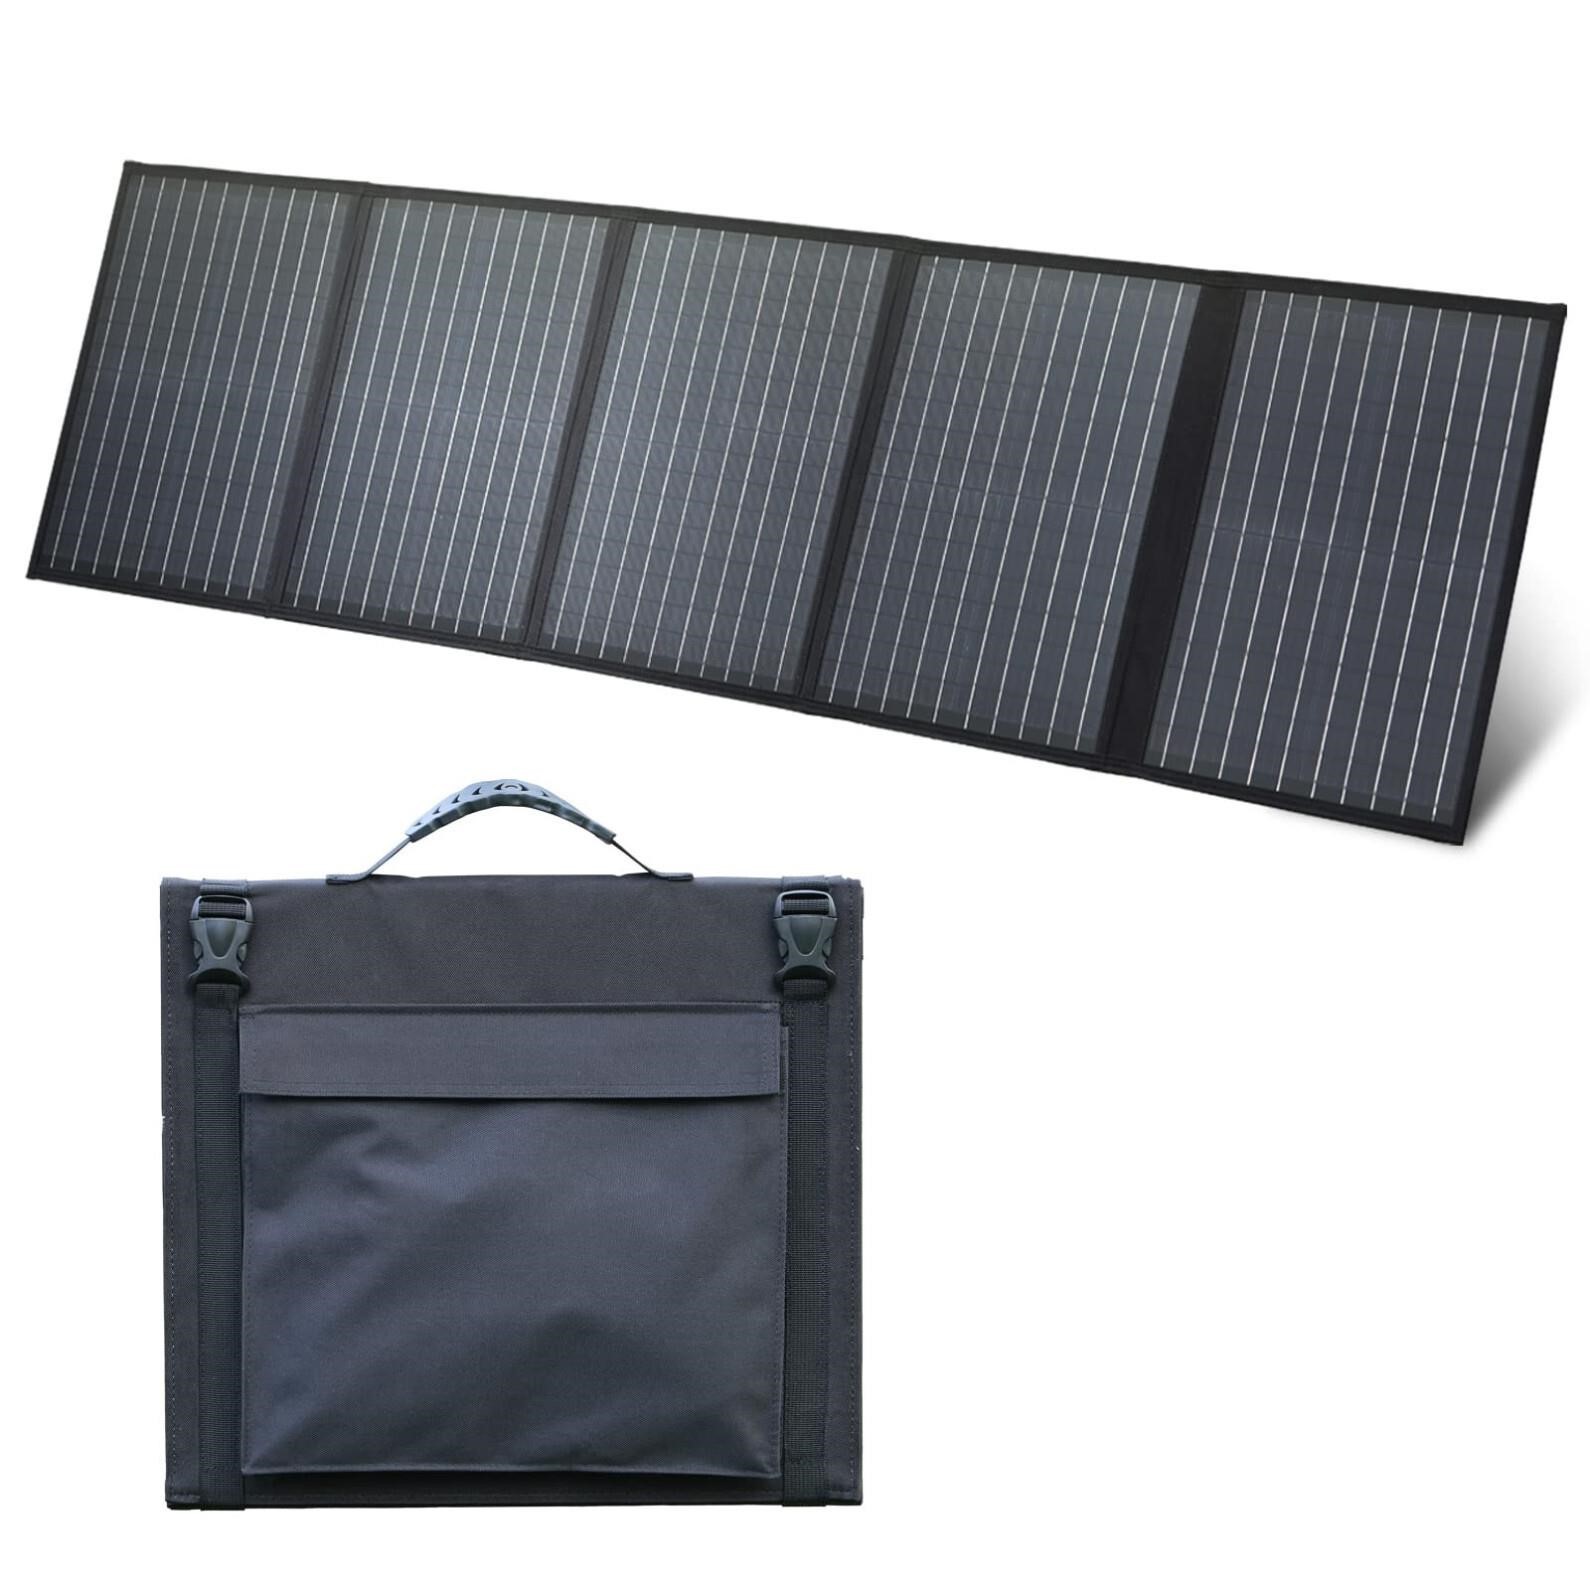 LEOCH 100W Portable Solar Panel for Power Station,